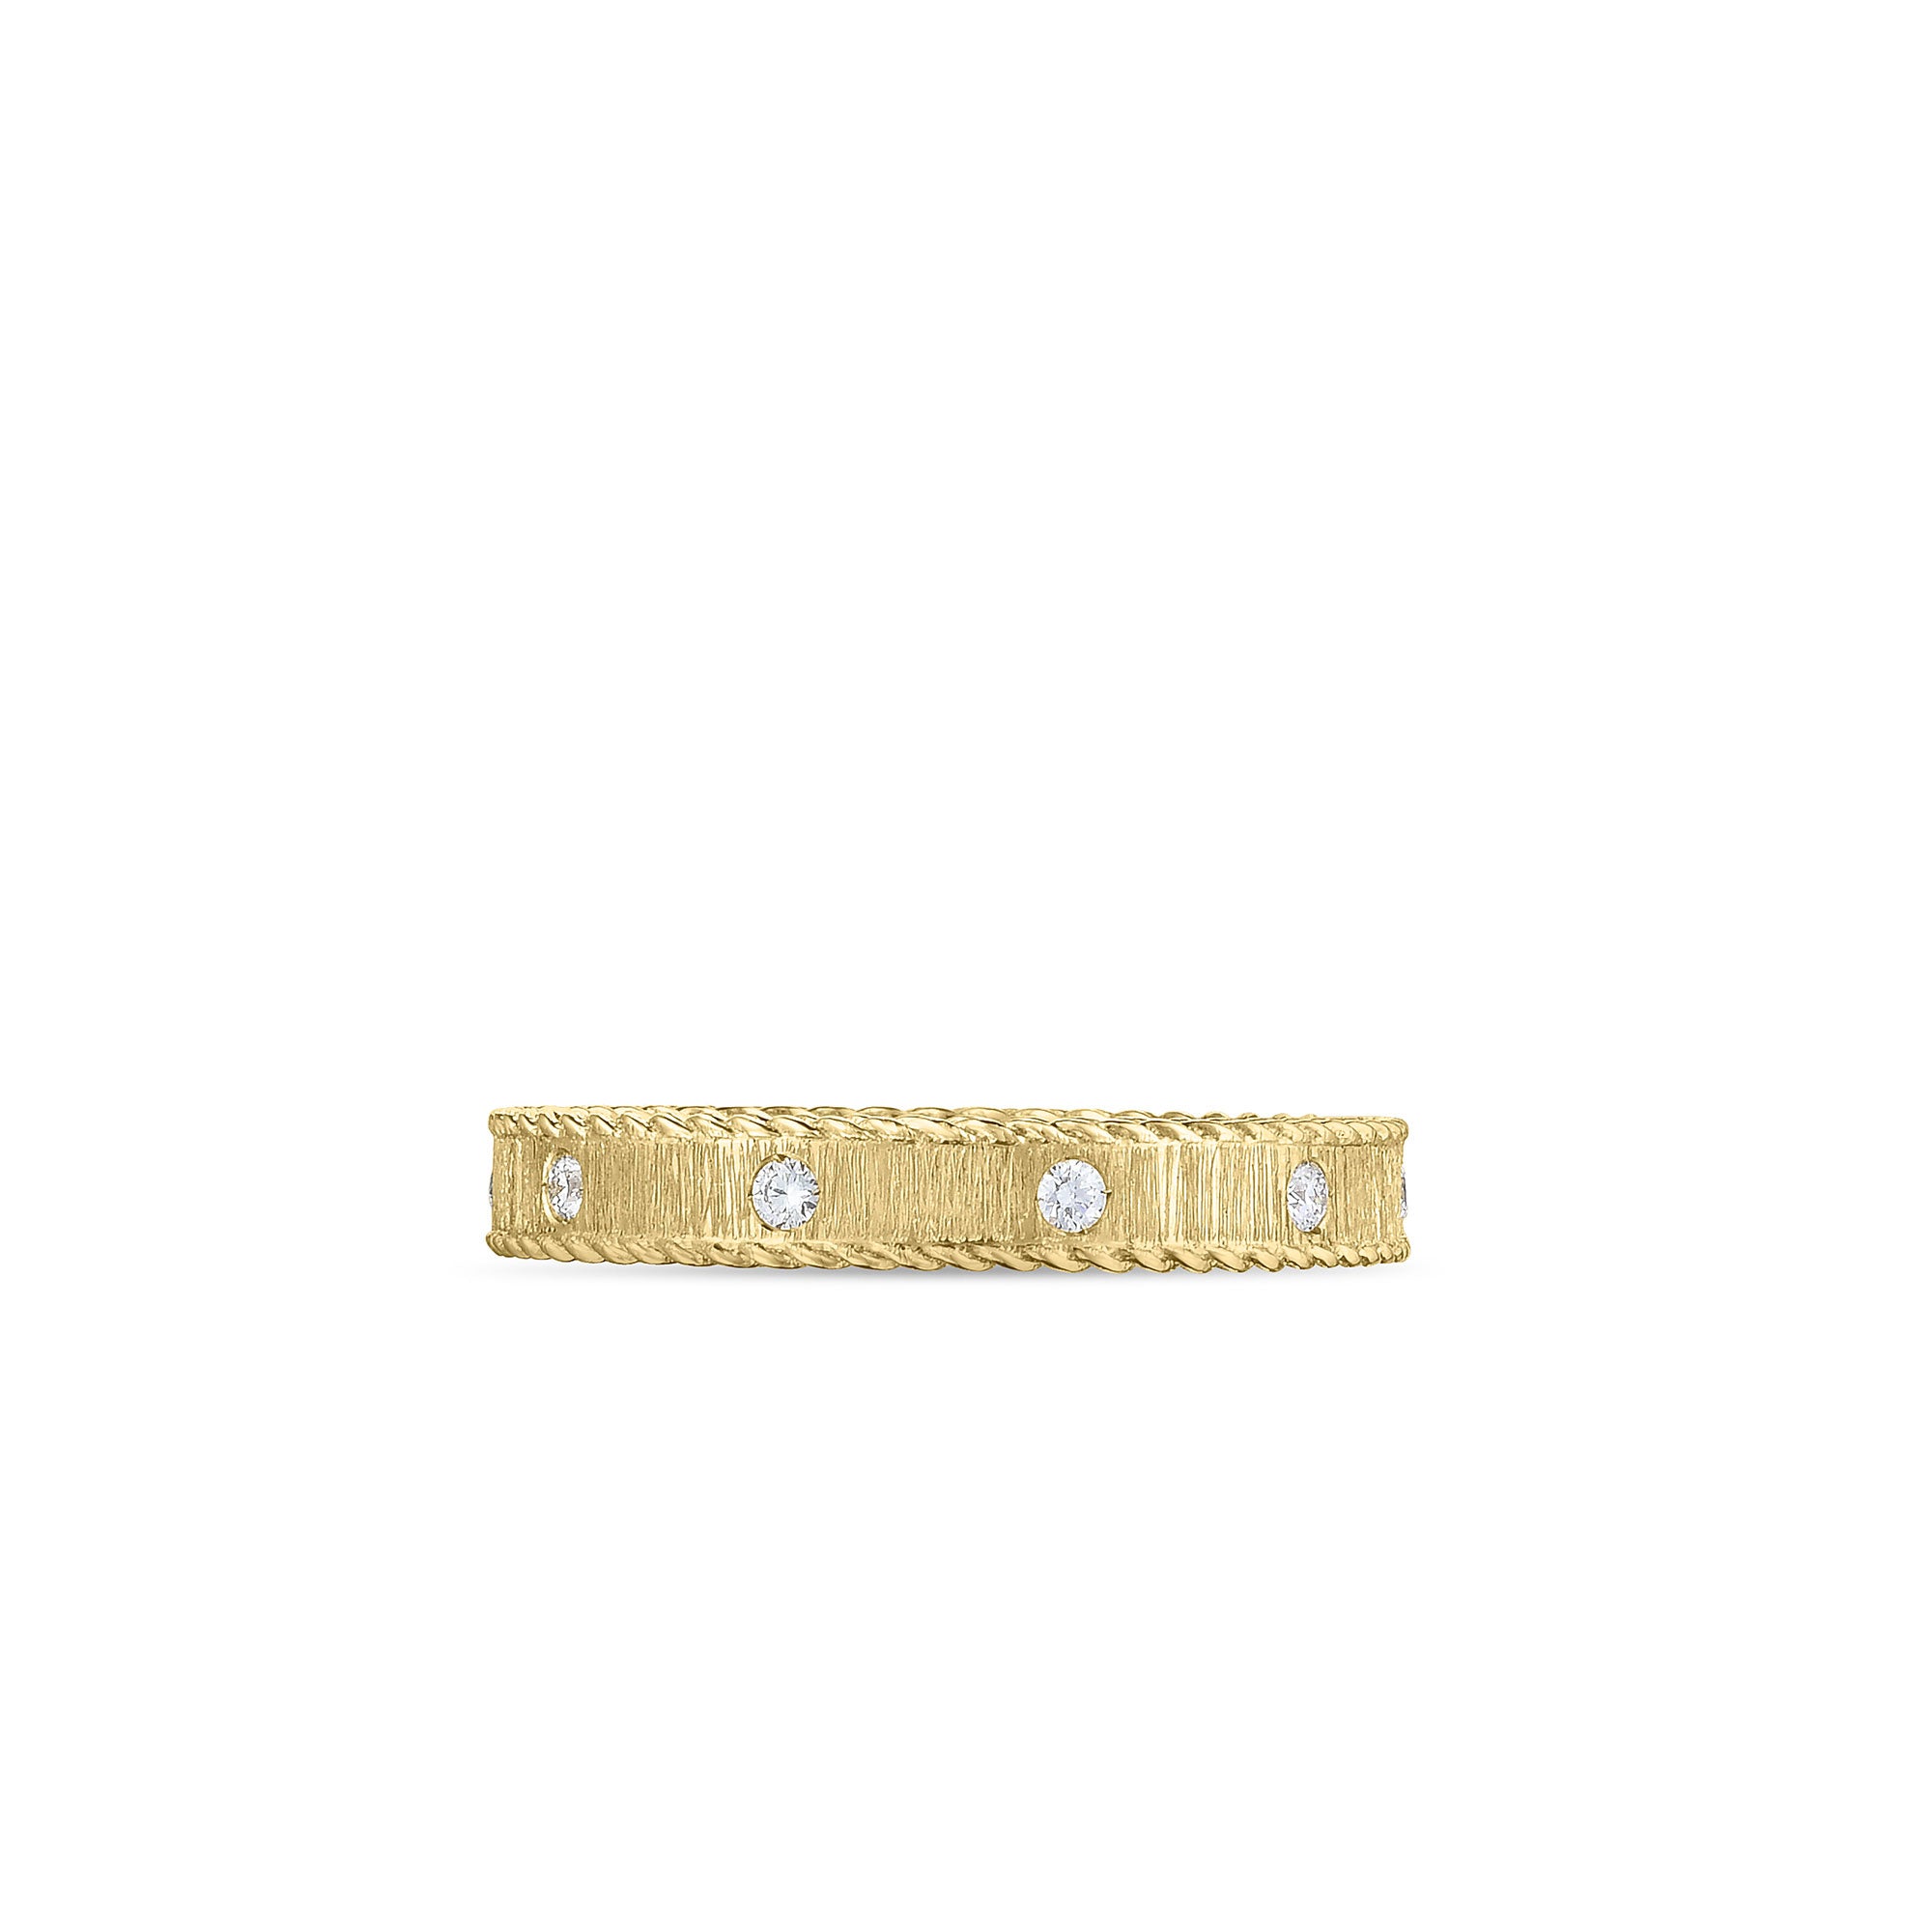 Rose gold ring with diamond ''Princess ring''